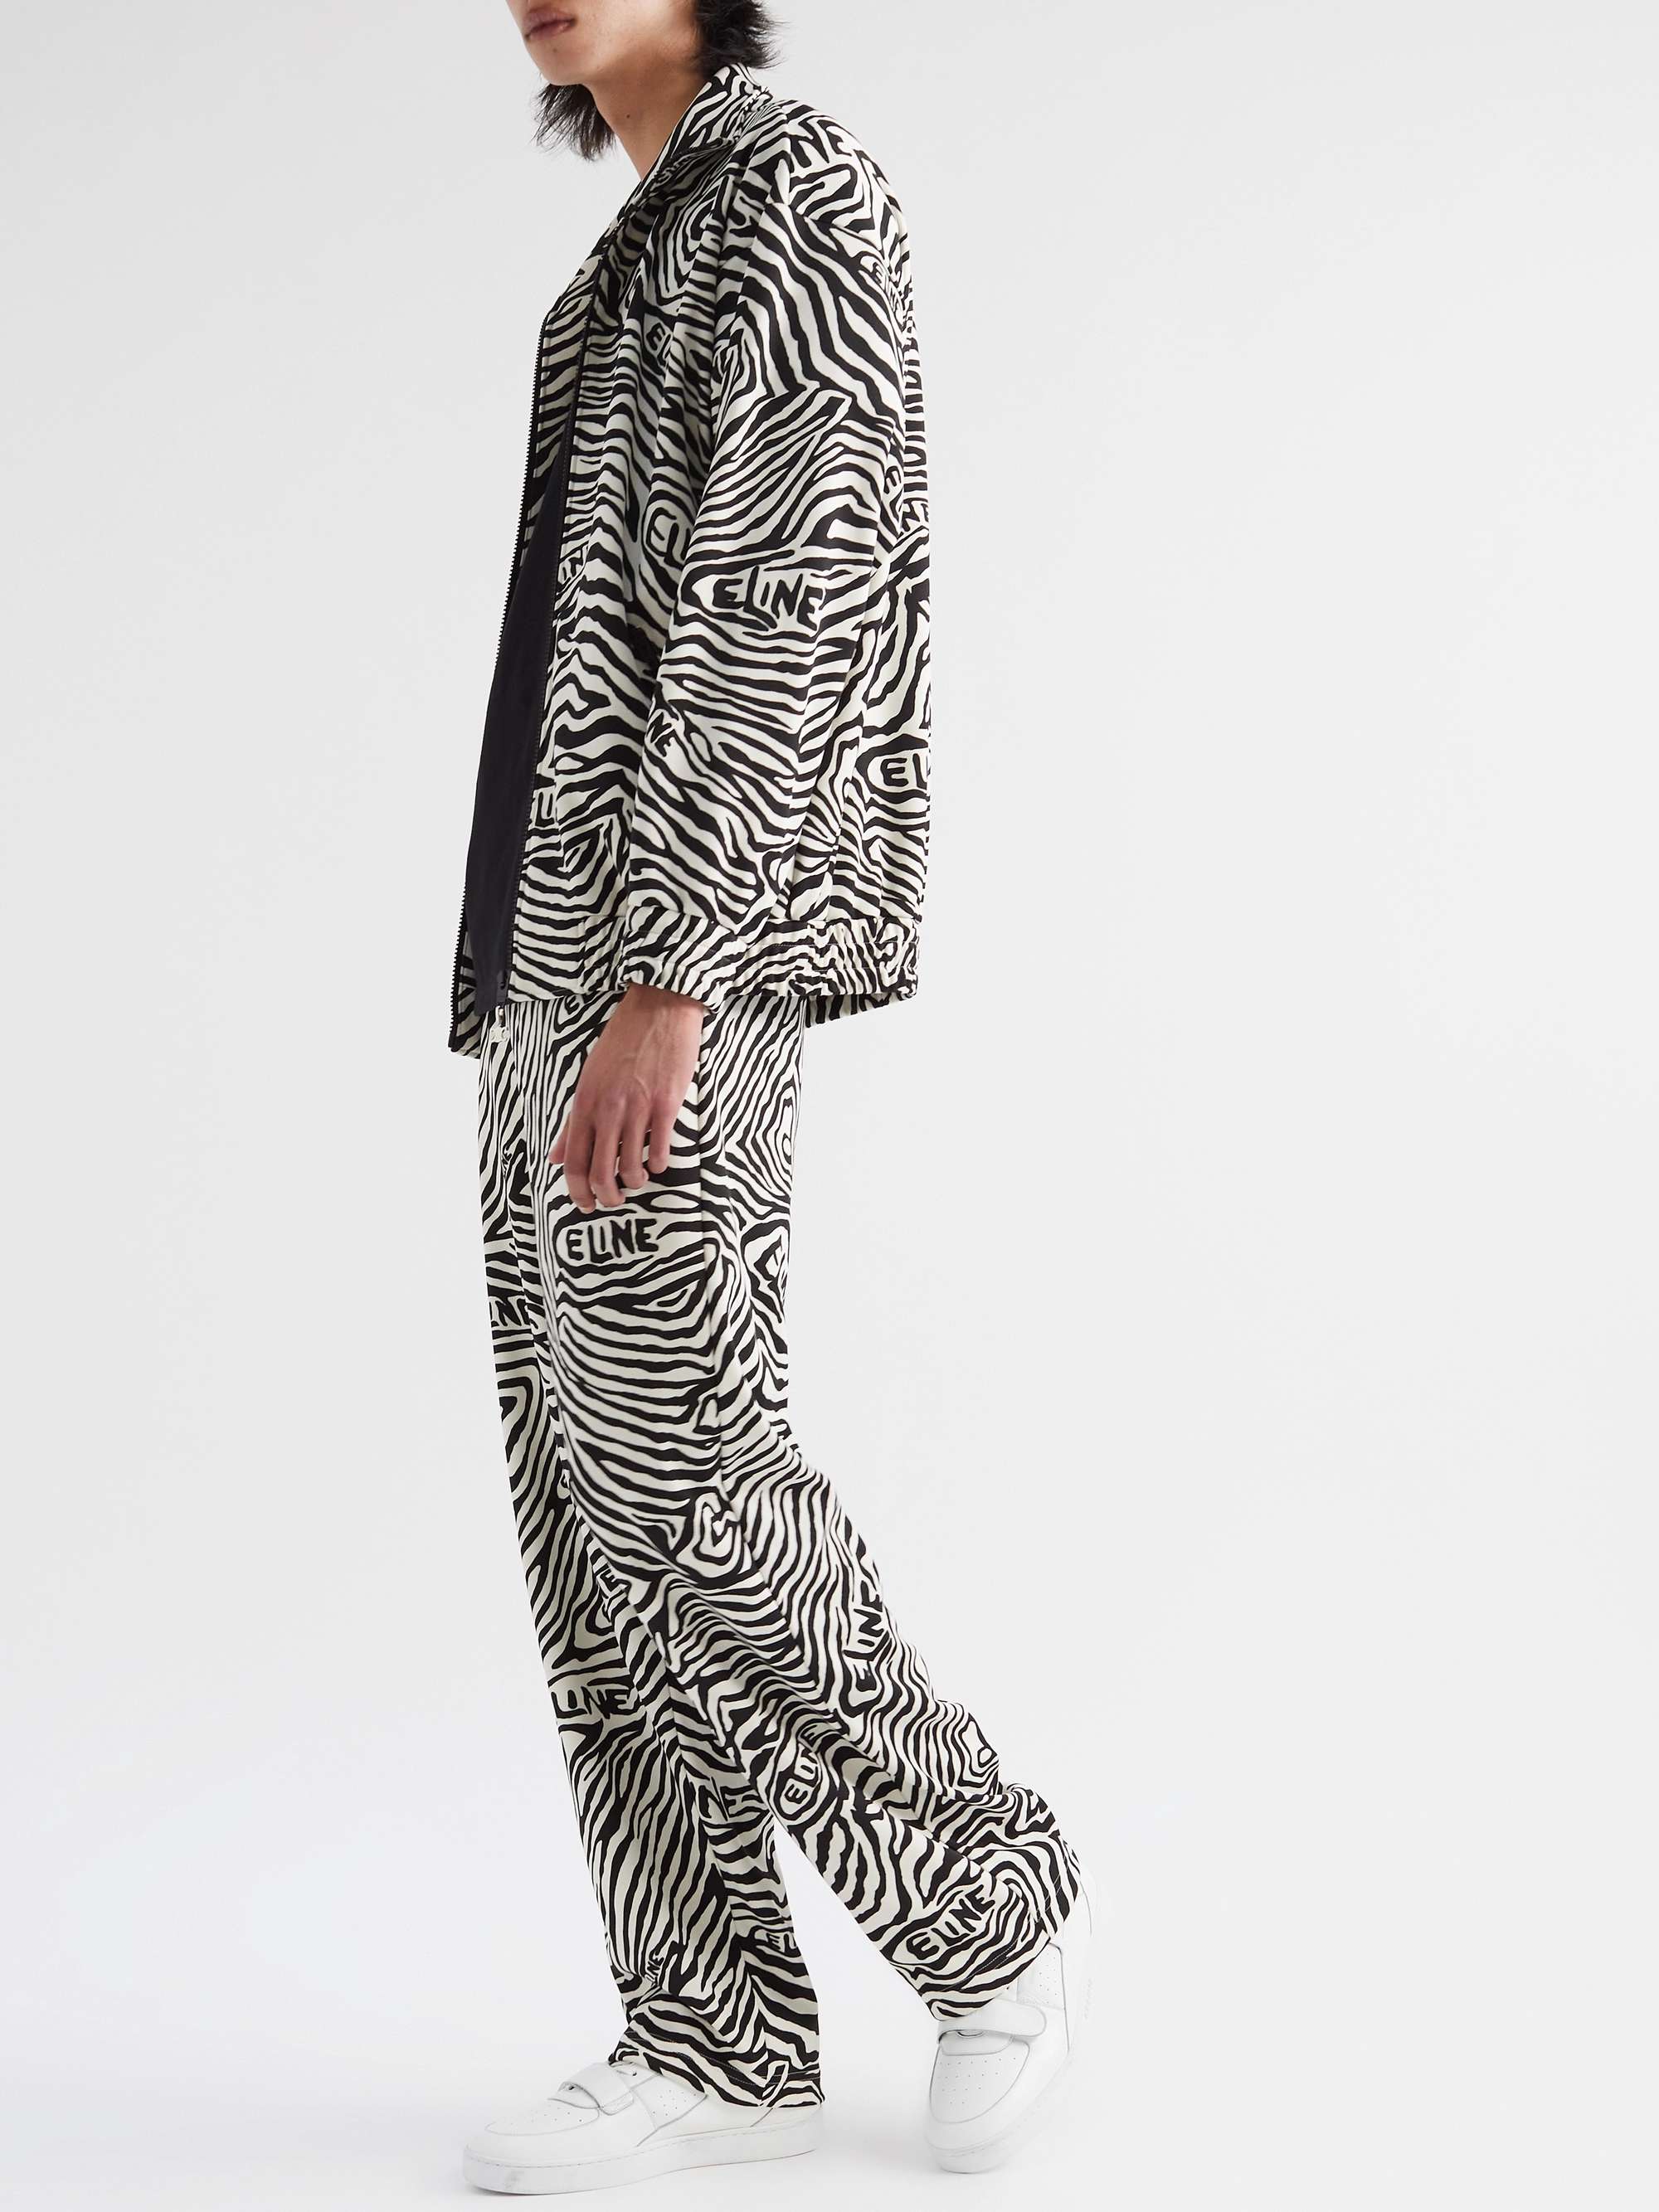 CELINE HOMME Zebra-Print Jersey Sweatpants